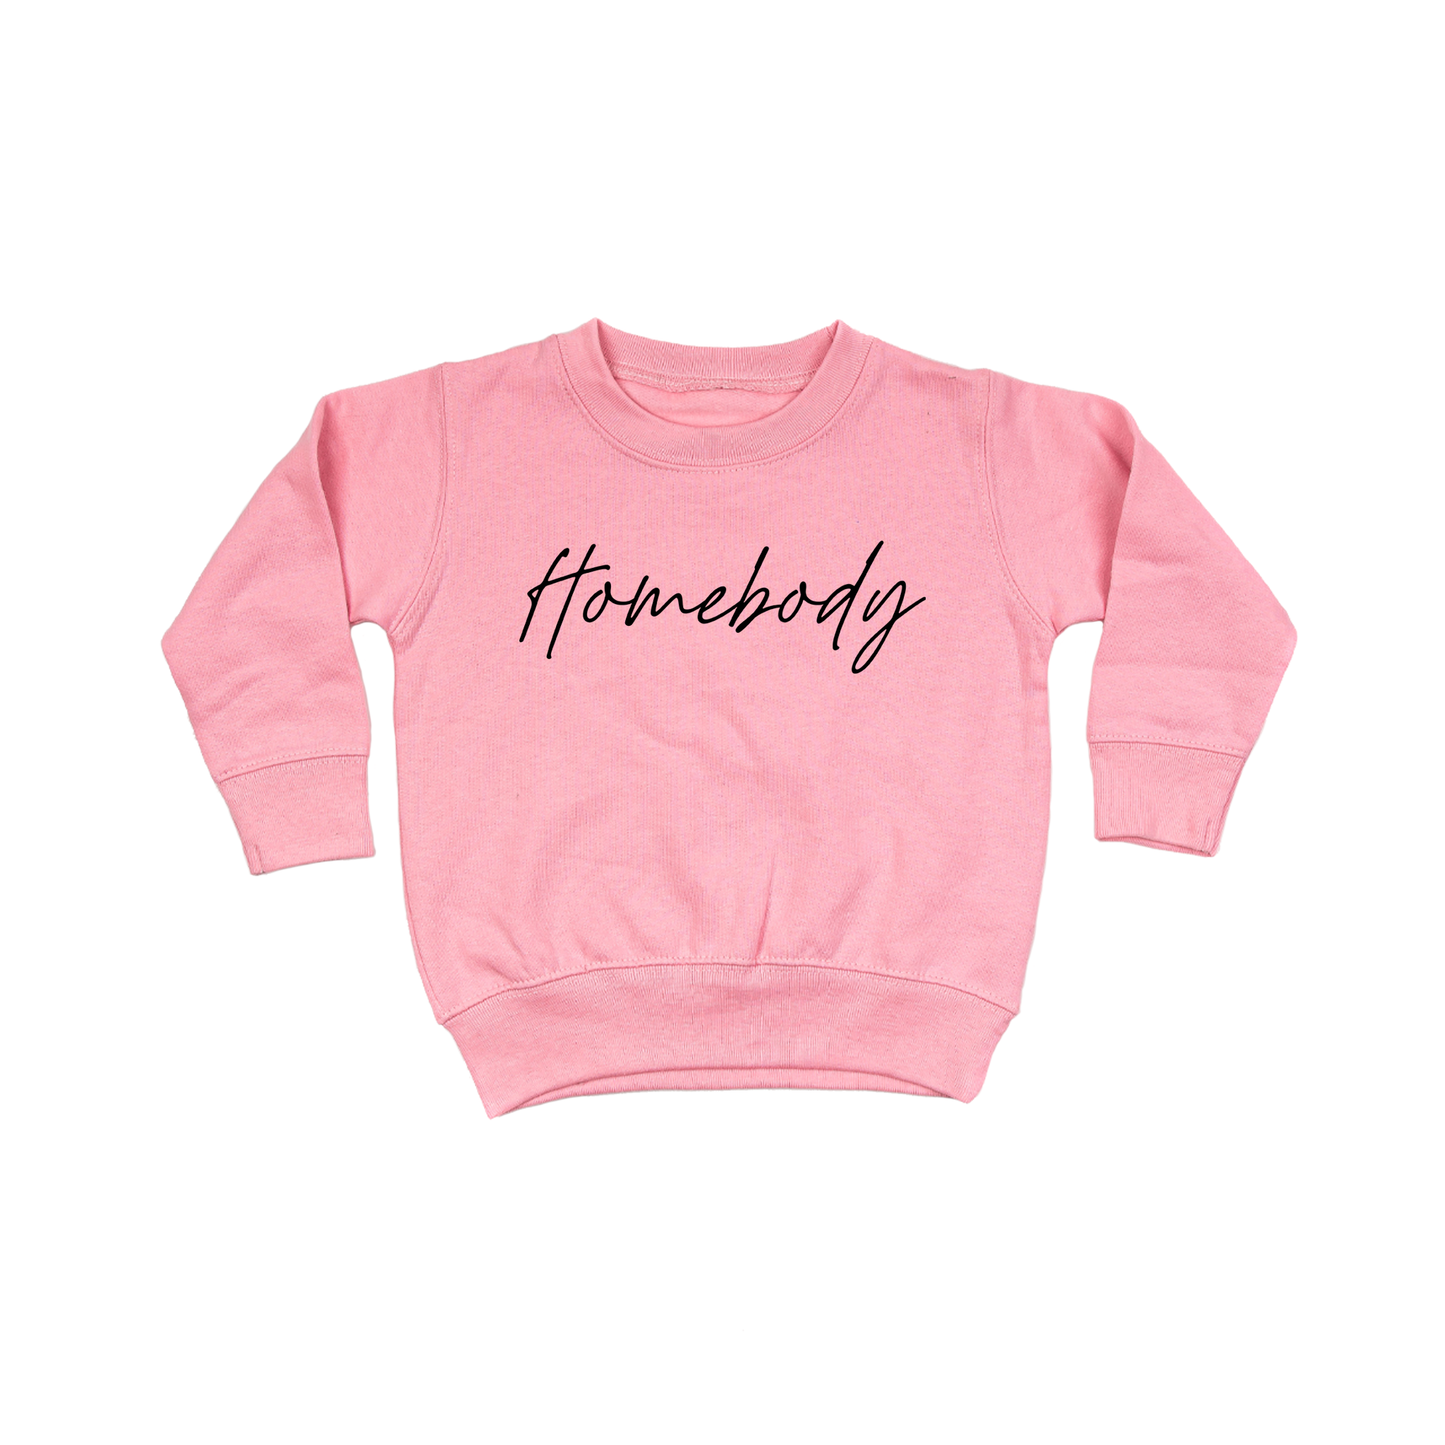 Homebody (Black) - Kids Sweatshirt (Pink)